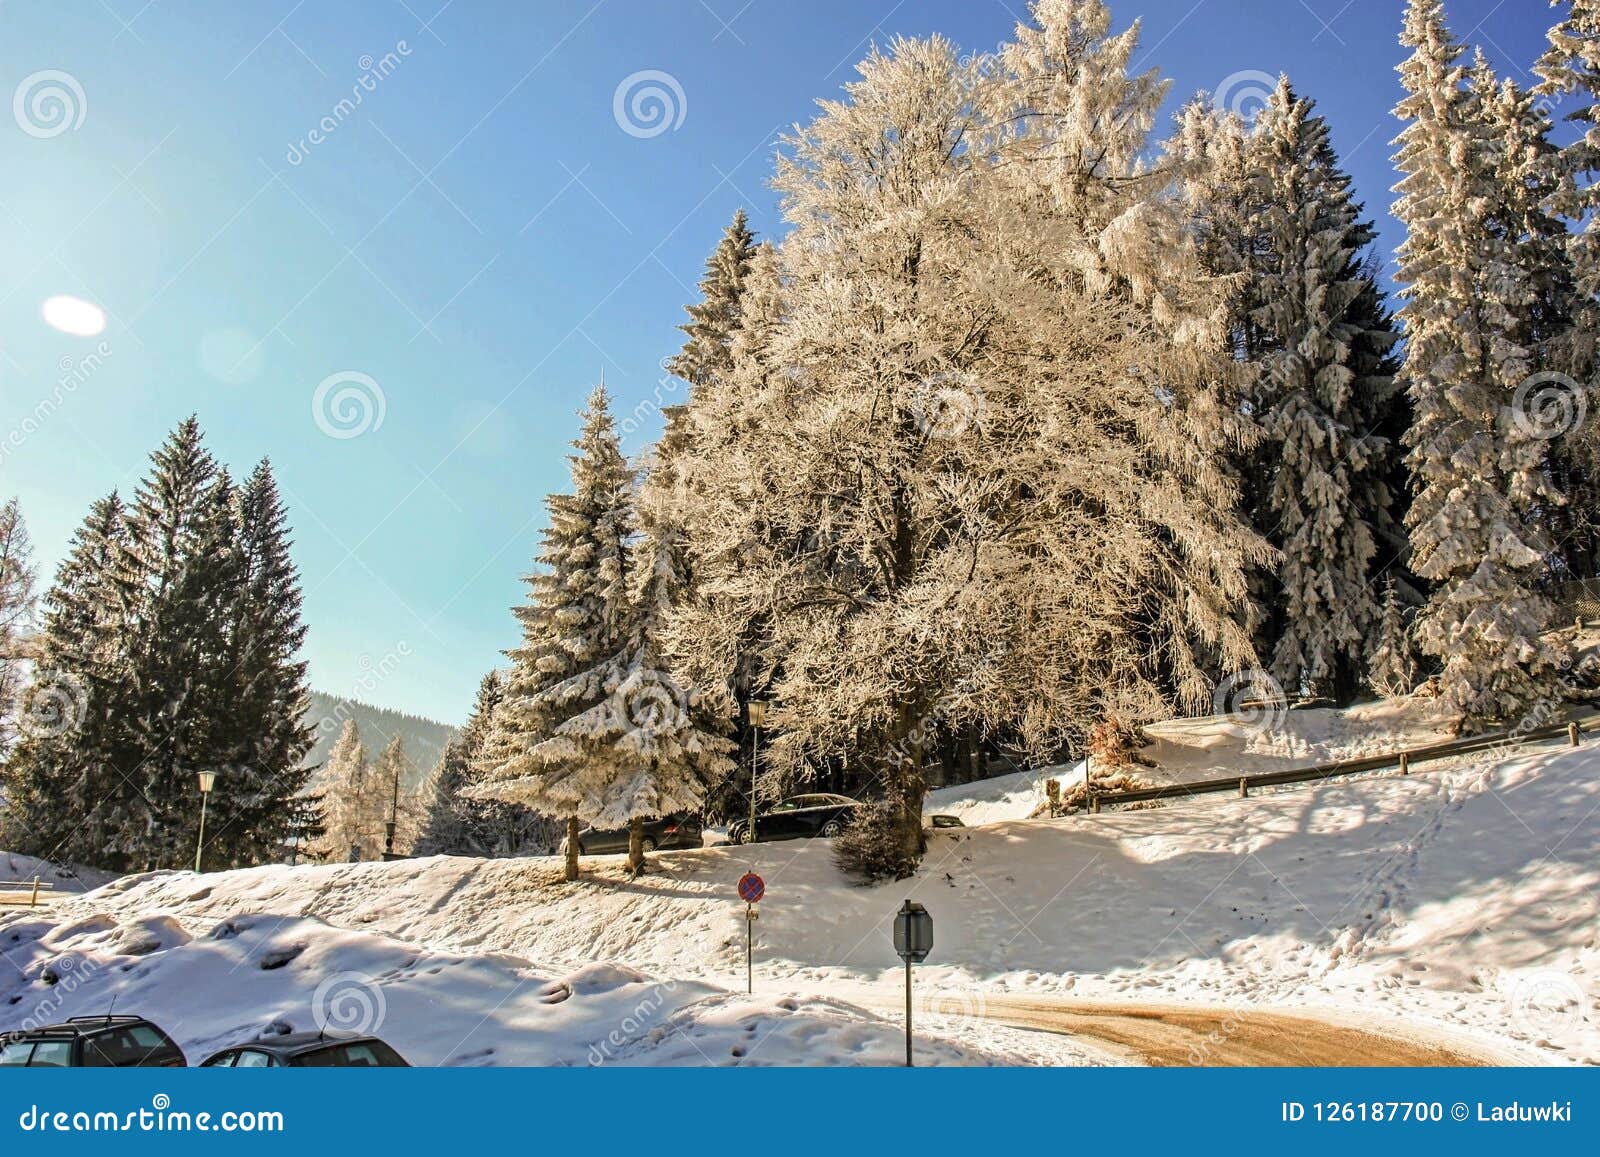 Winter Wonderland Mountain Scenery With Centuries Old Spruce